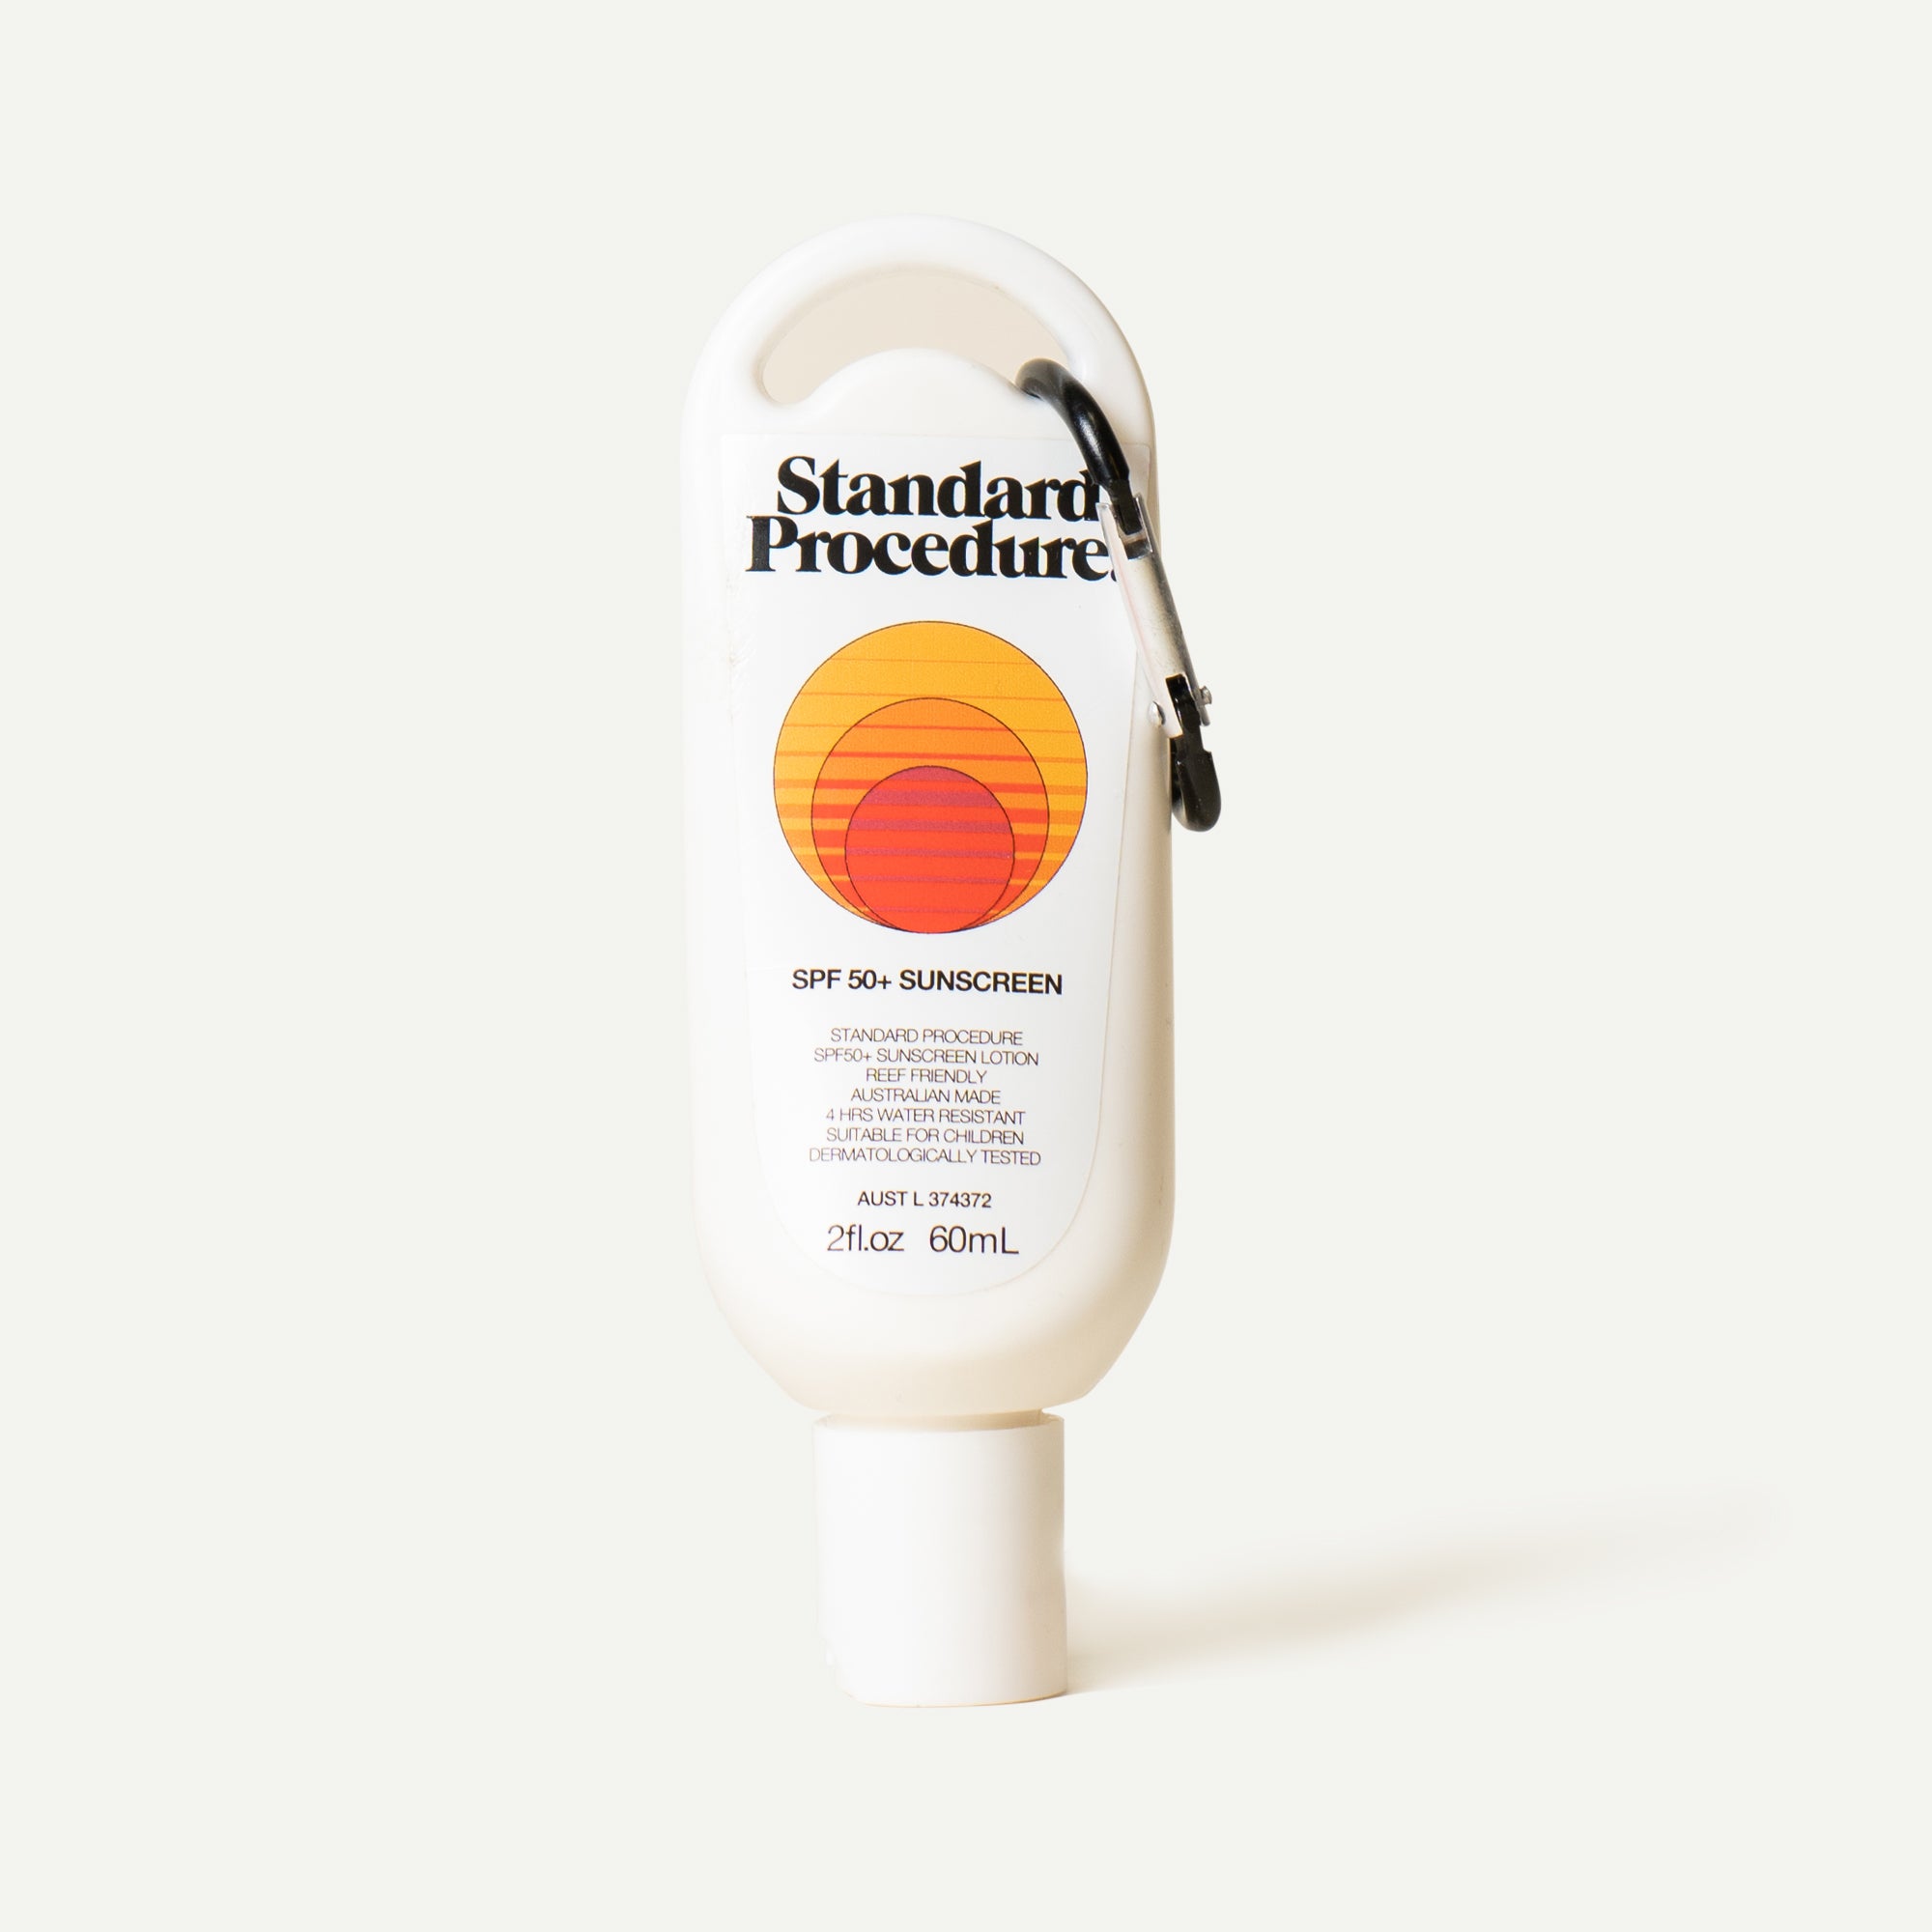 Standard Procedure SPF 50+ Sunscreen 60ml Clip On